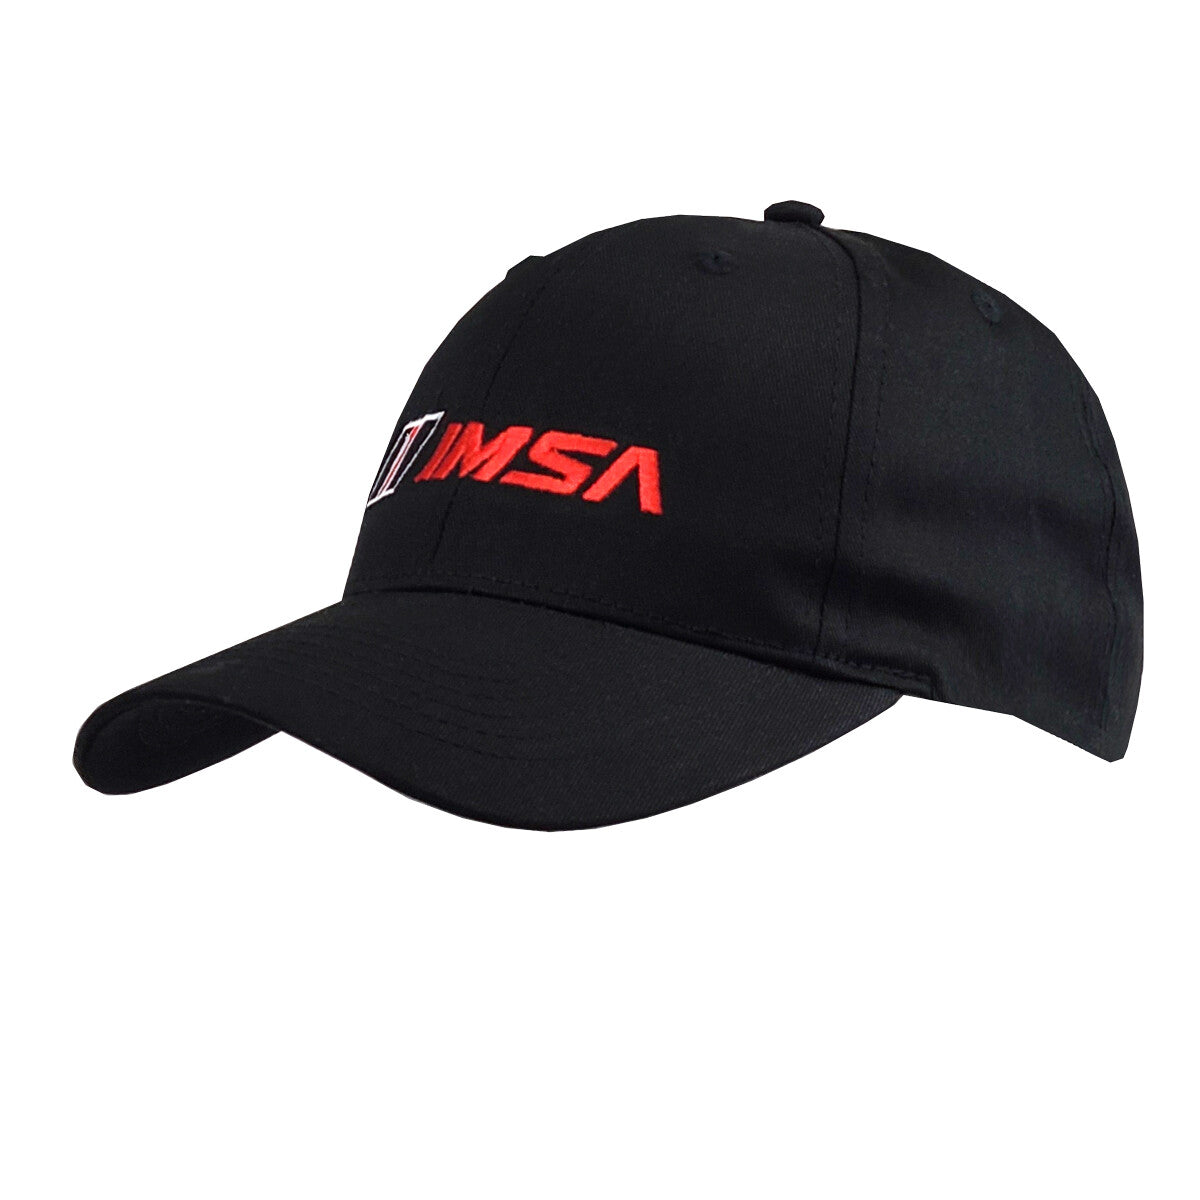 IMSA Youth Hat-Black